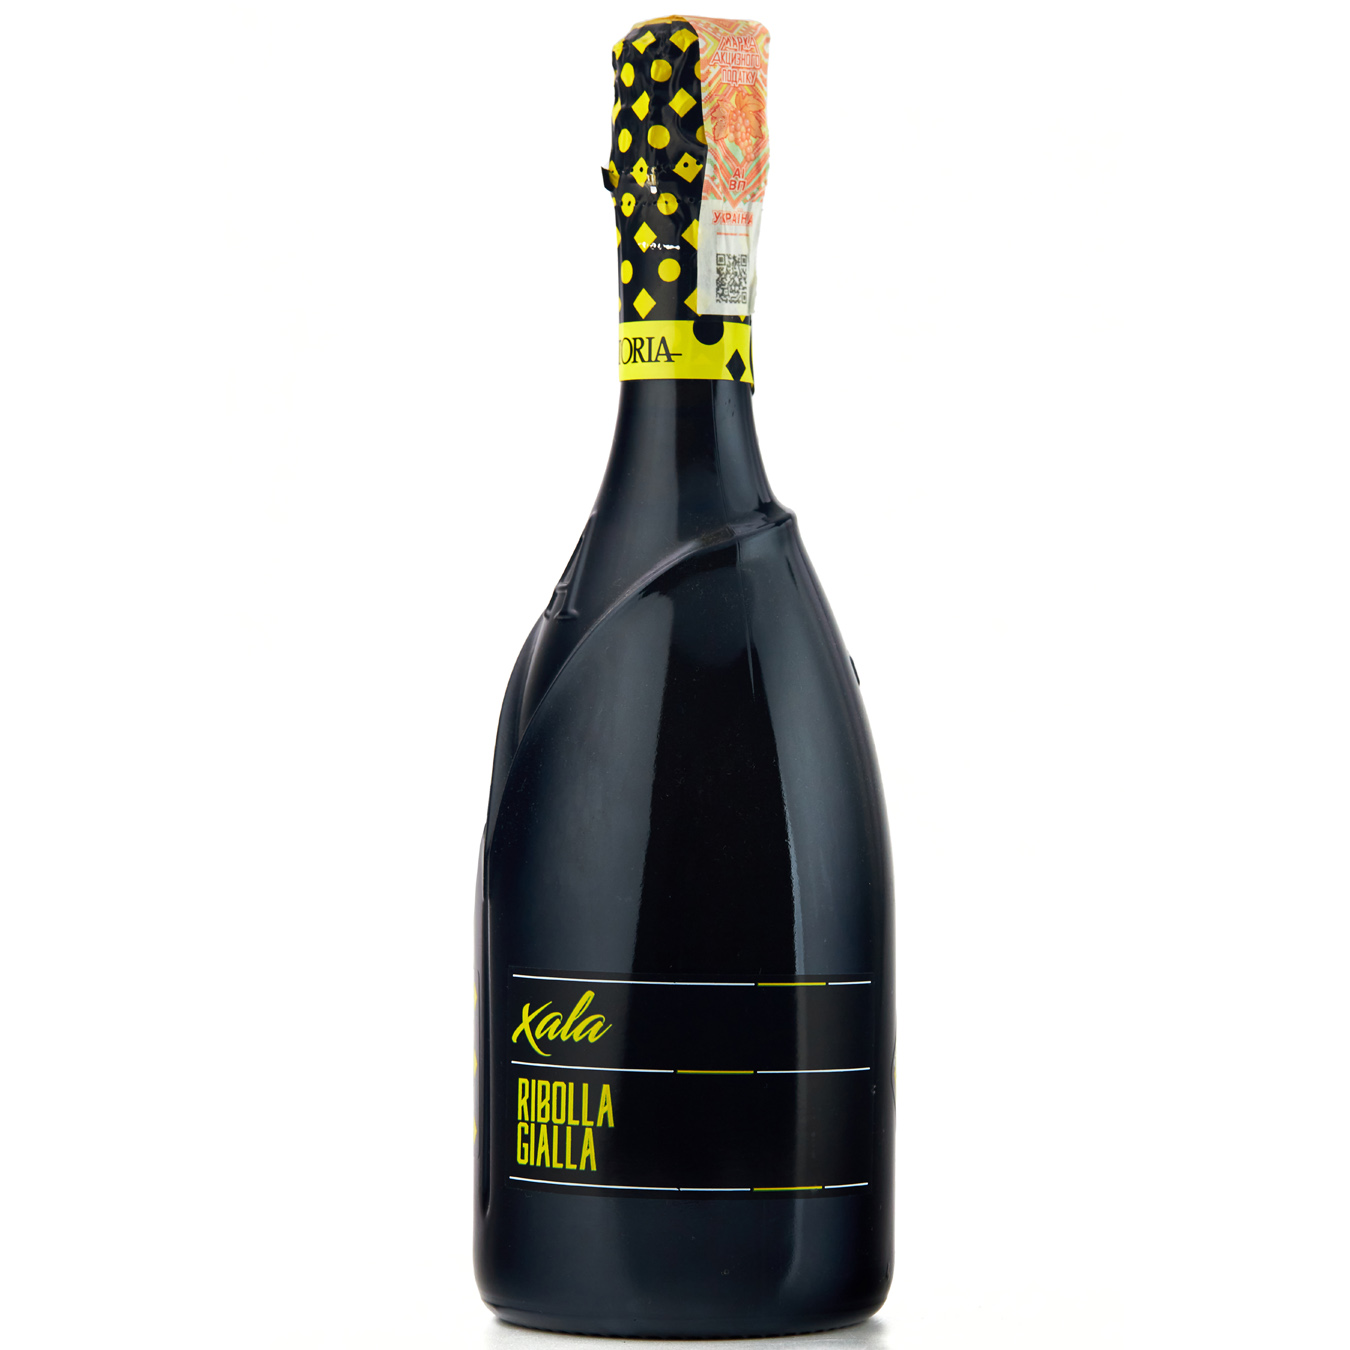 Astoria Xala Ribolla Gialla Brut Sparkling Wine 12% 750ml